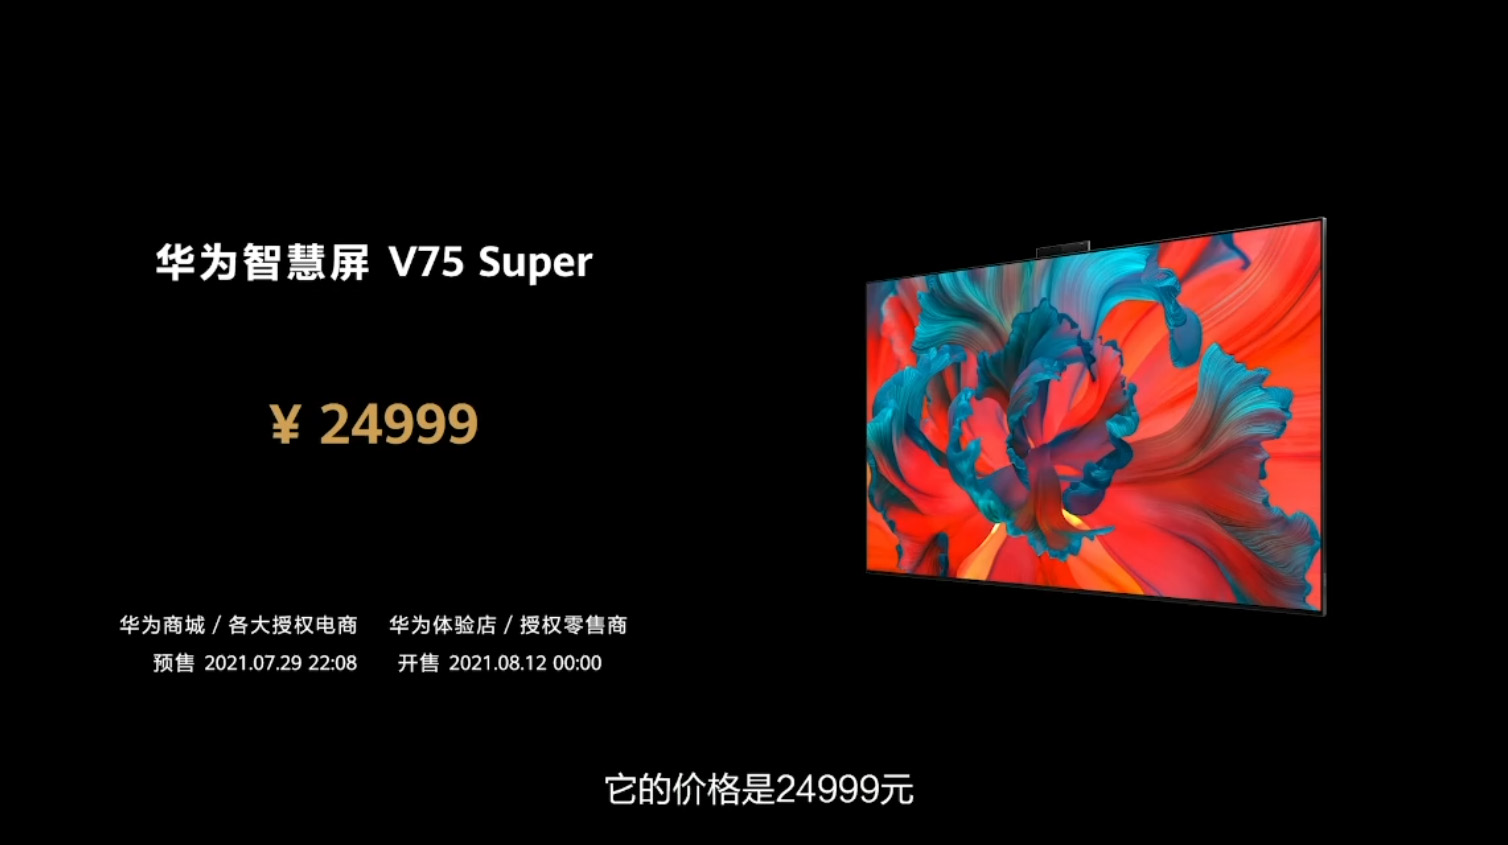 huawei vision v75 super price